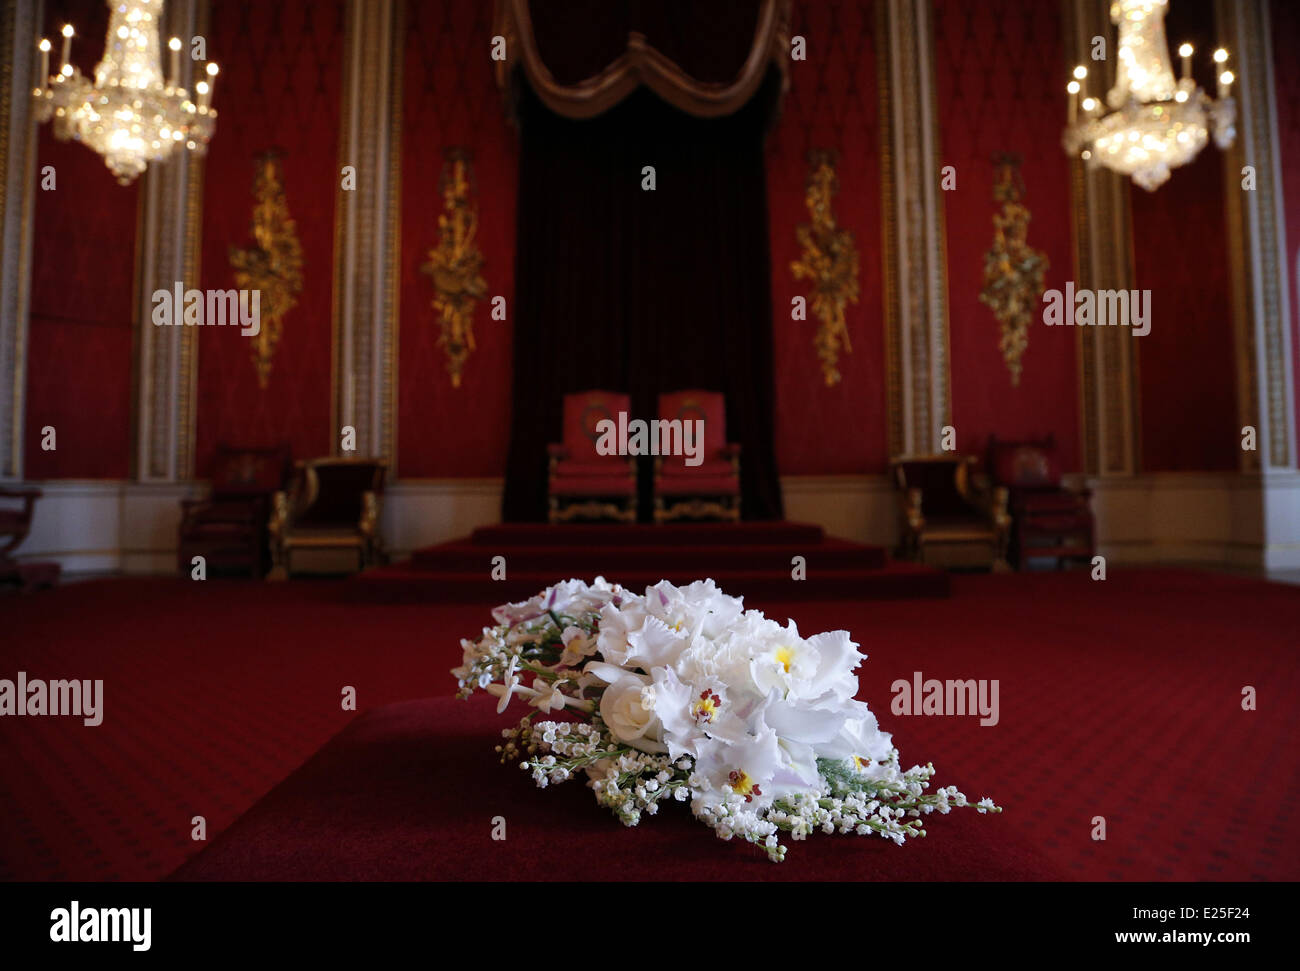 Queen Elizabeth Ii In The Throne Room Of Buckingham Palace